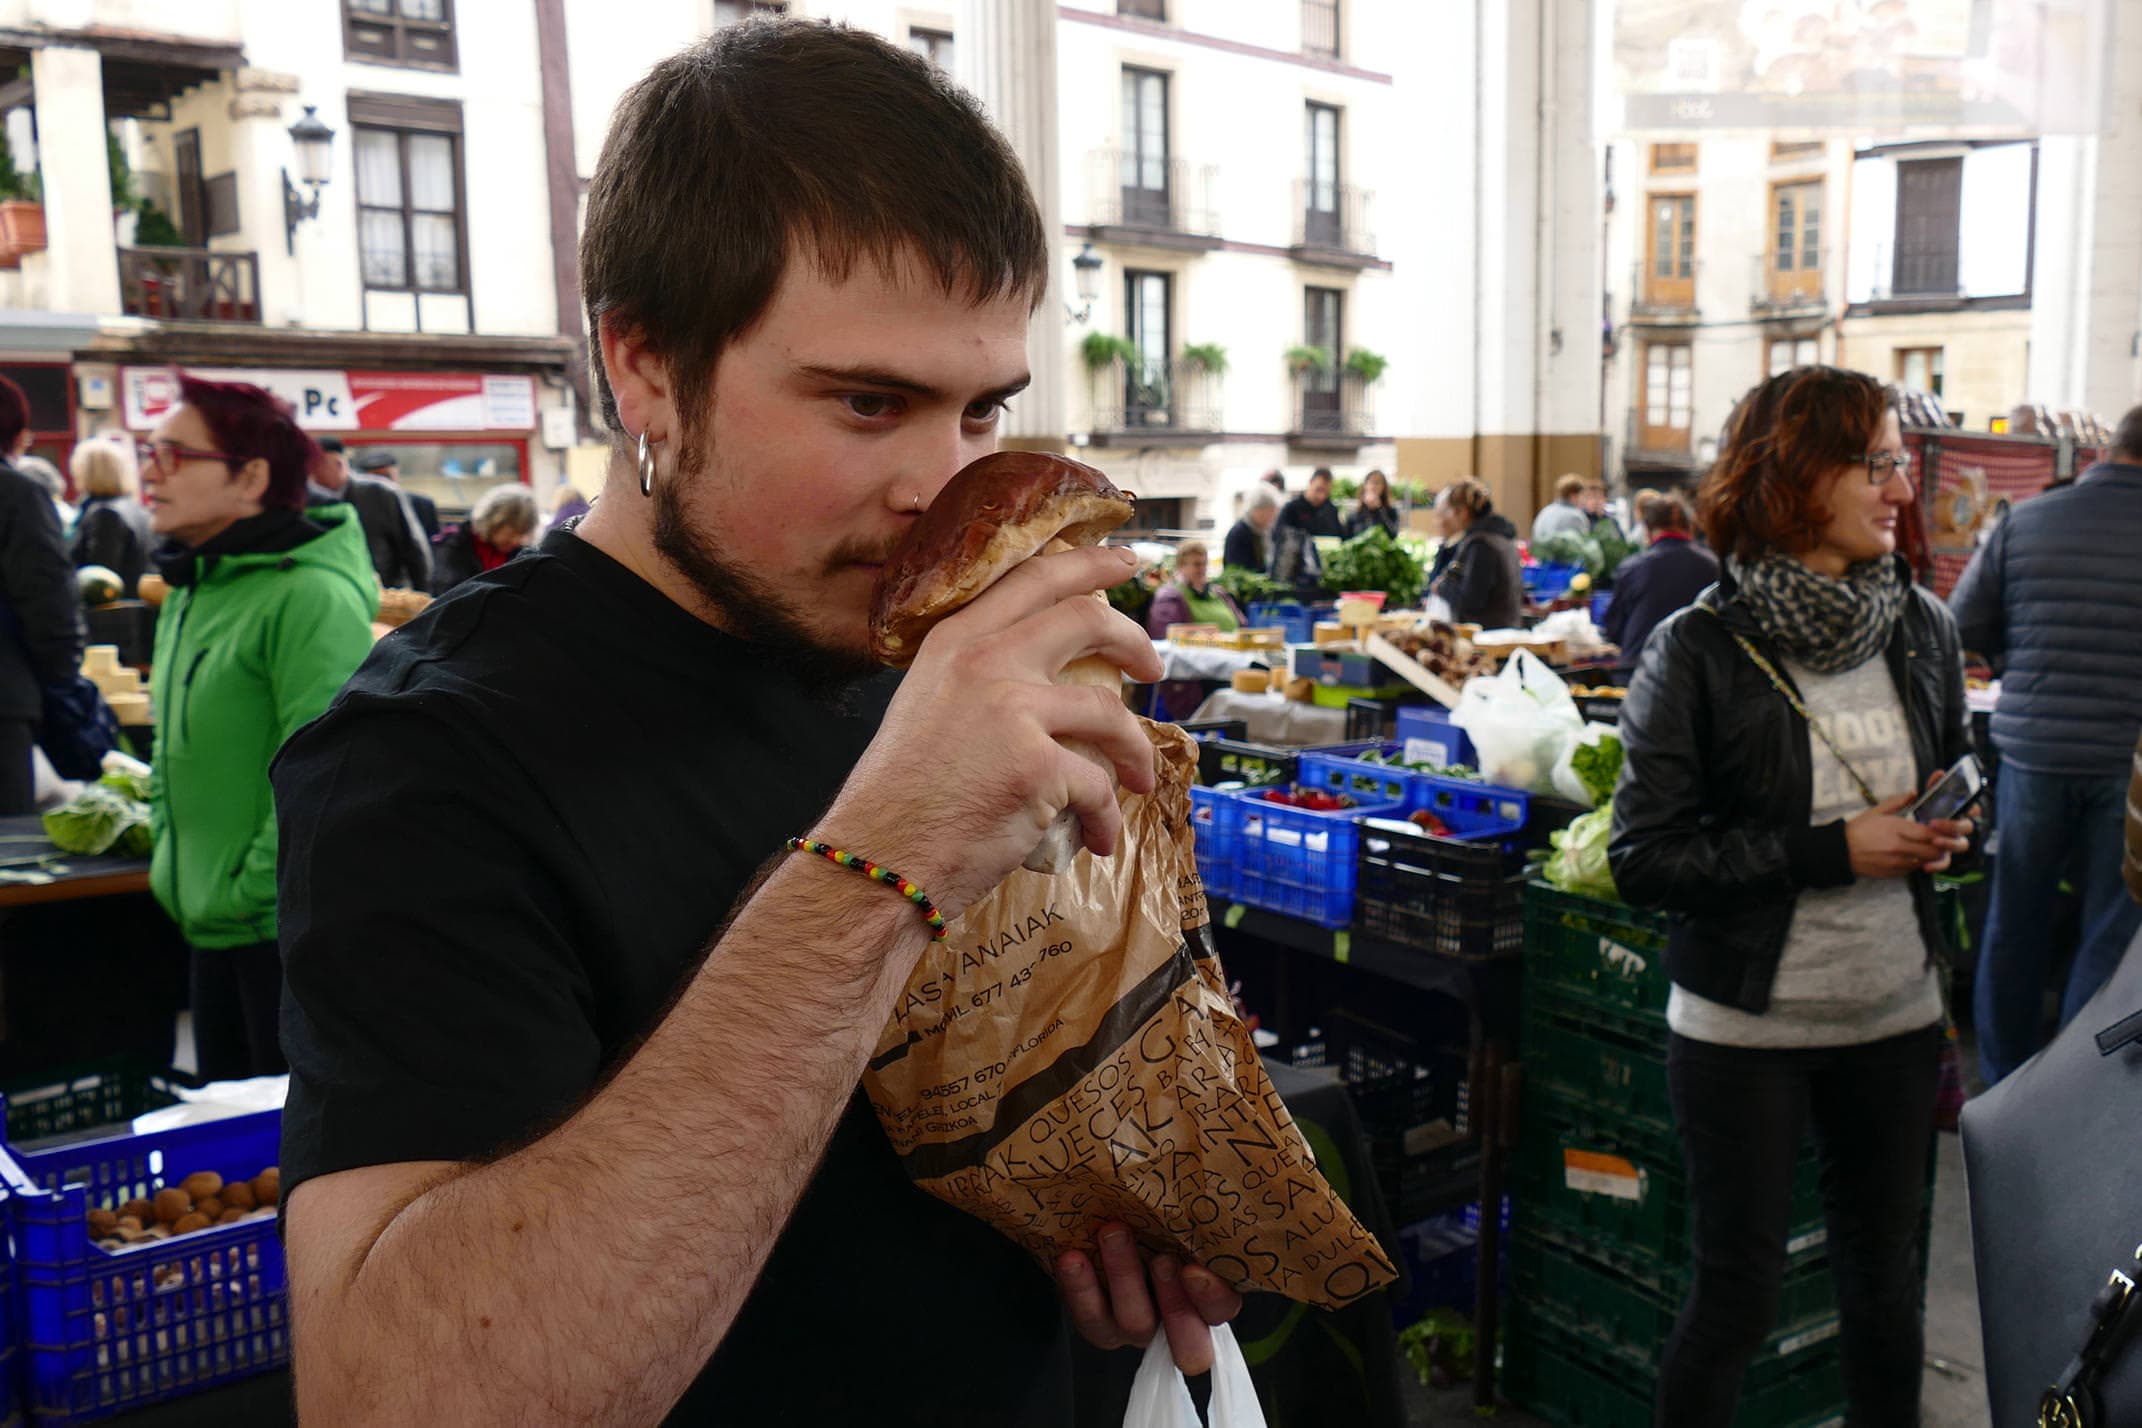 Spain basque country ordizia market chef smelling boletus mushroom